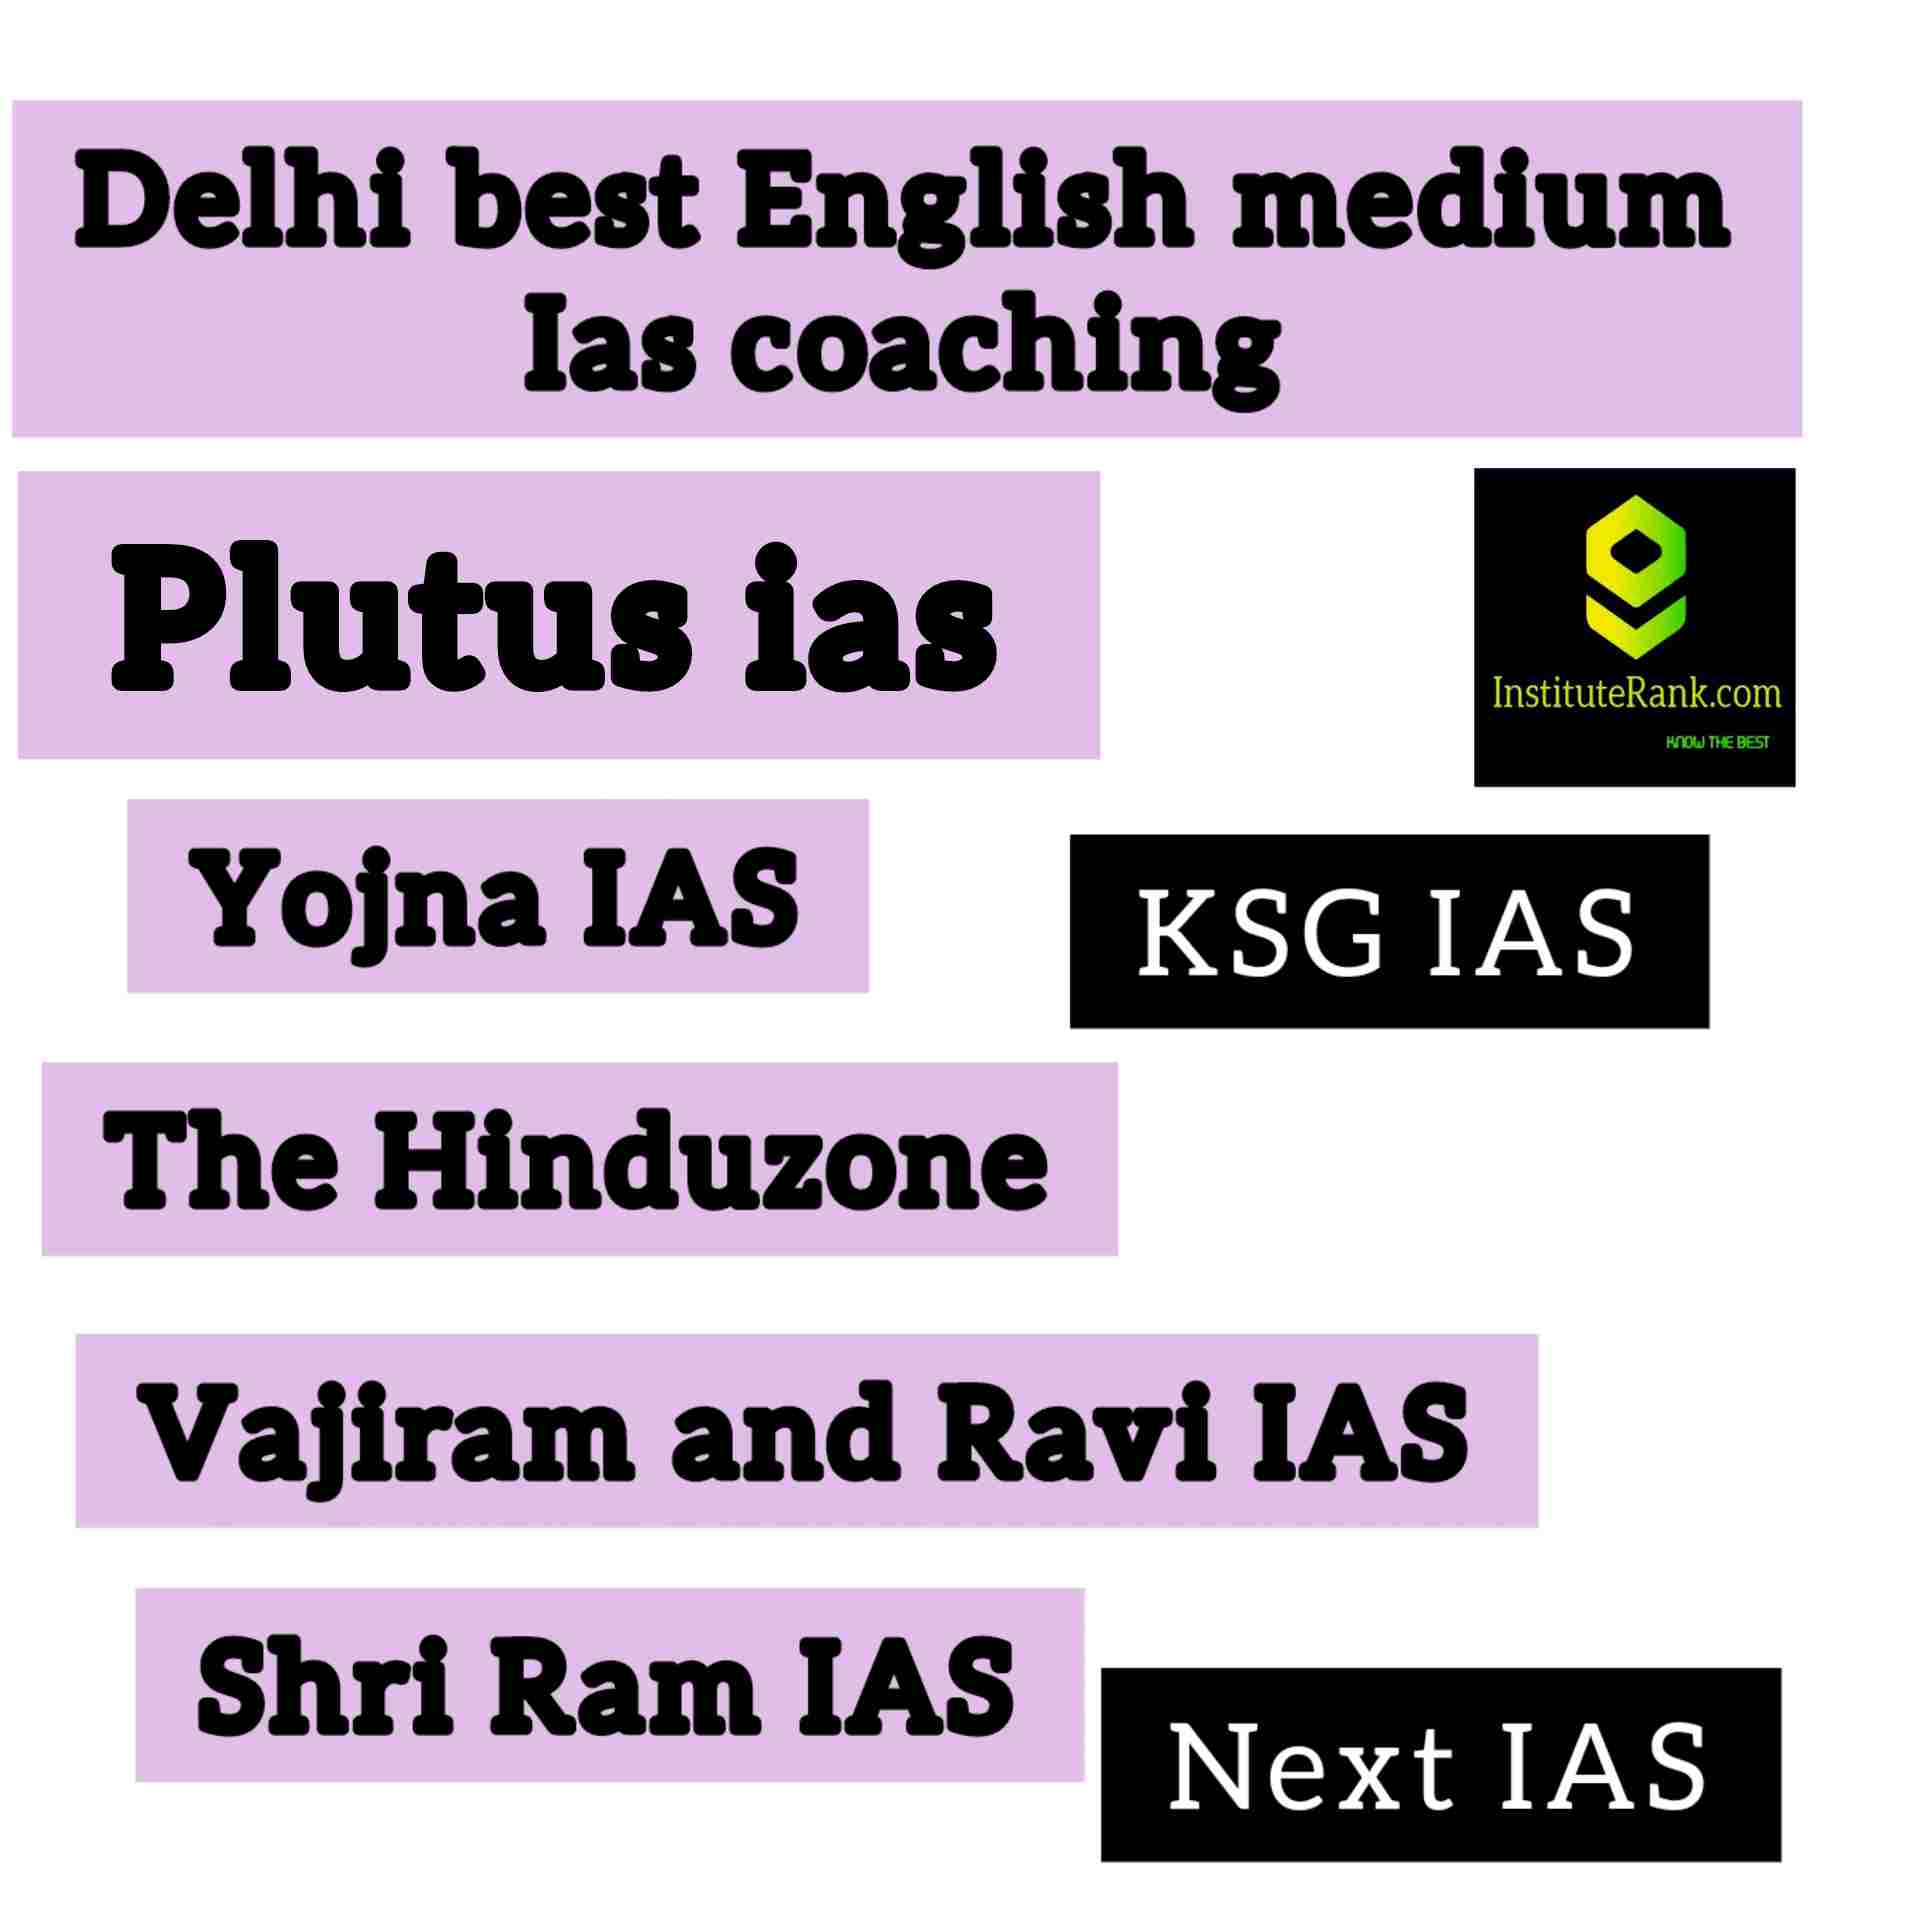 Delhi English medium ias coaching 